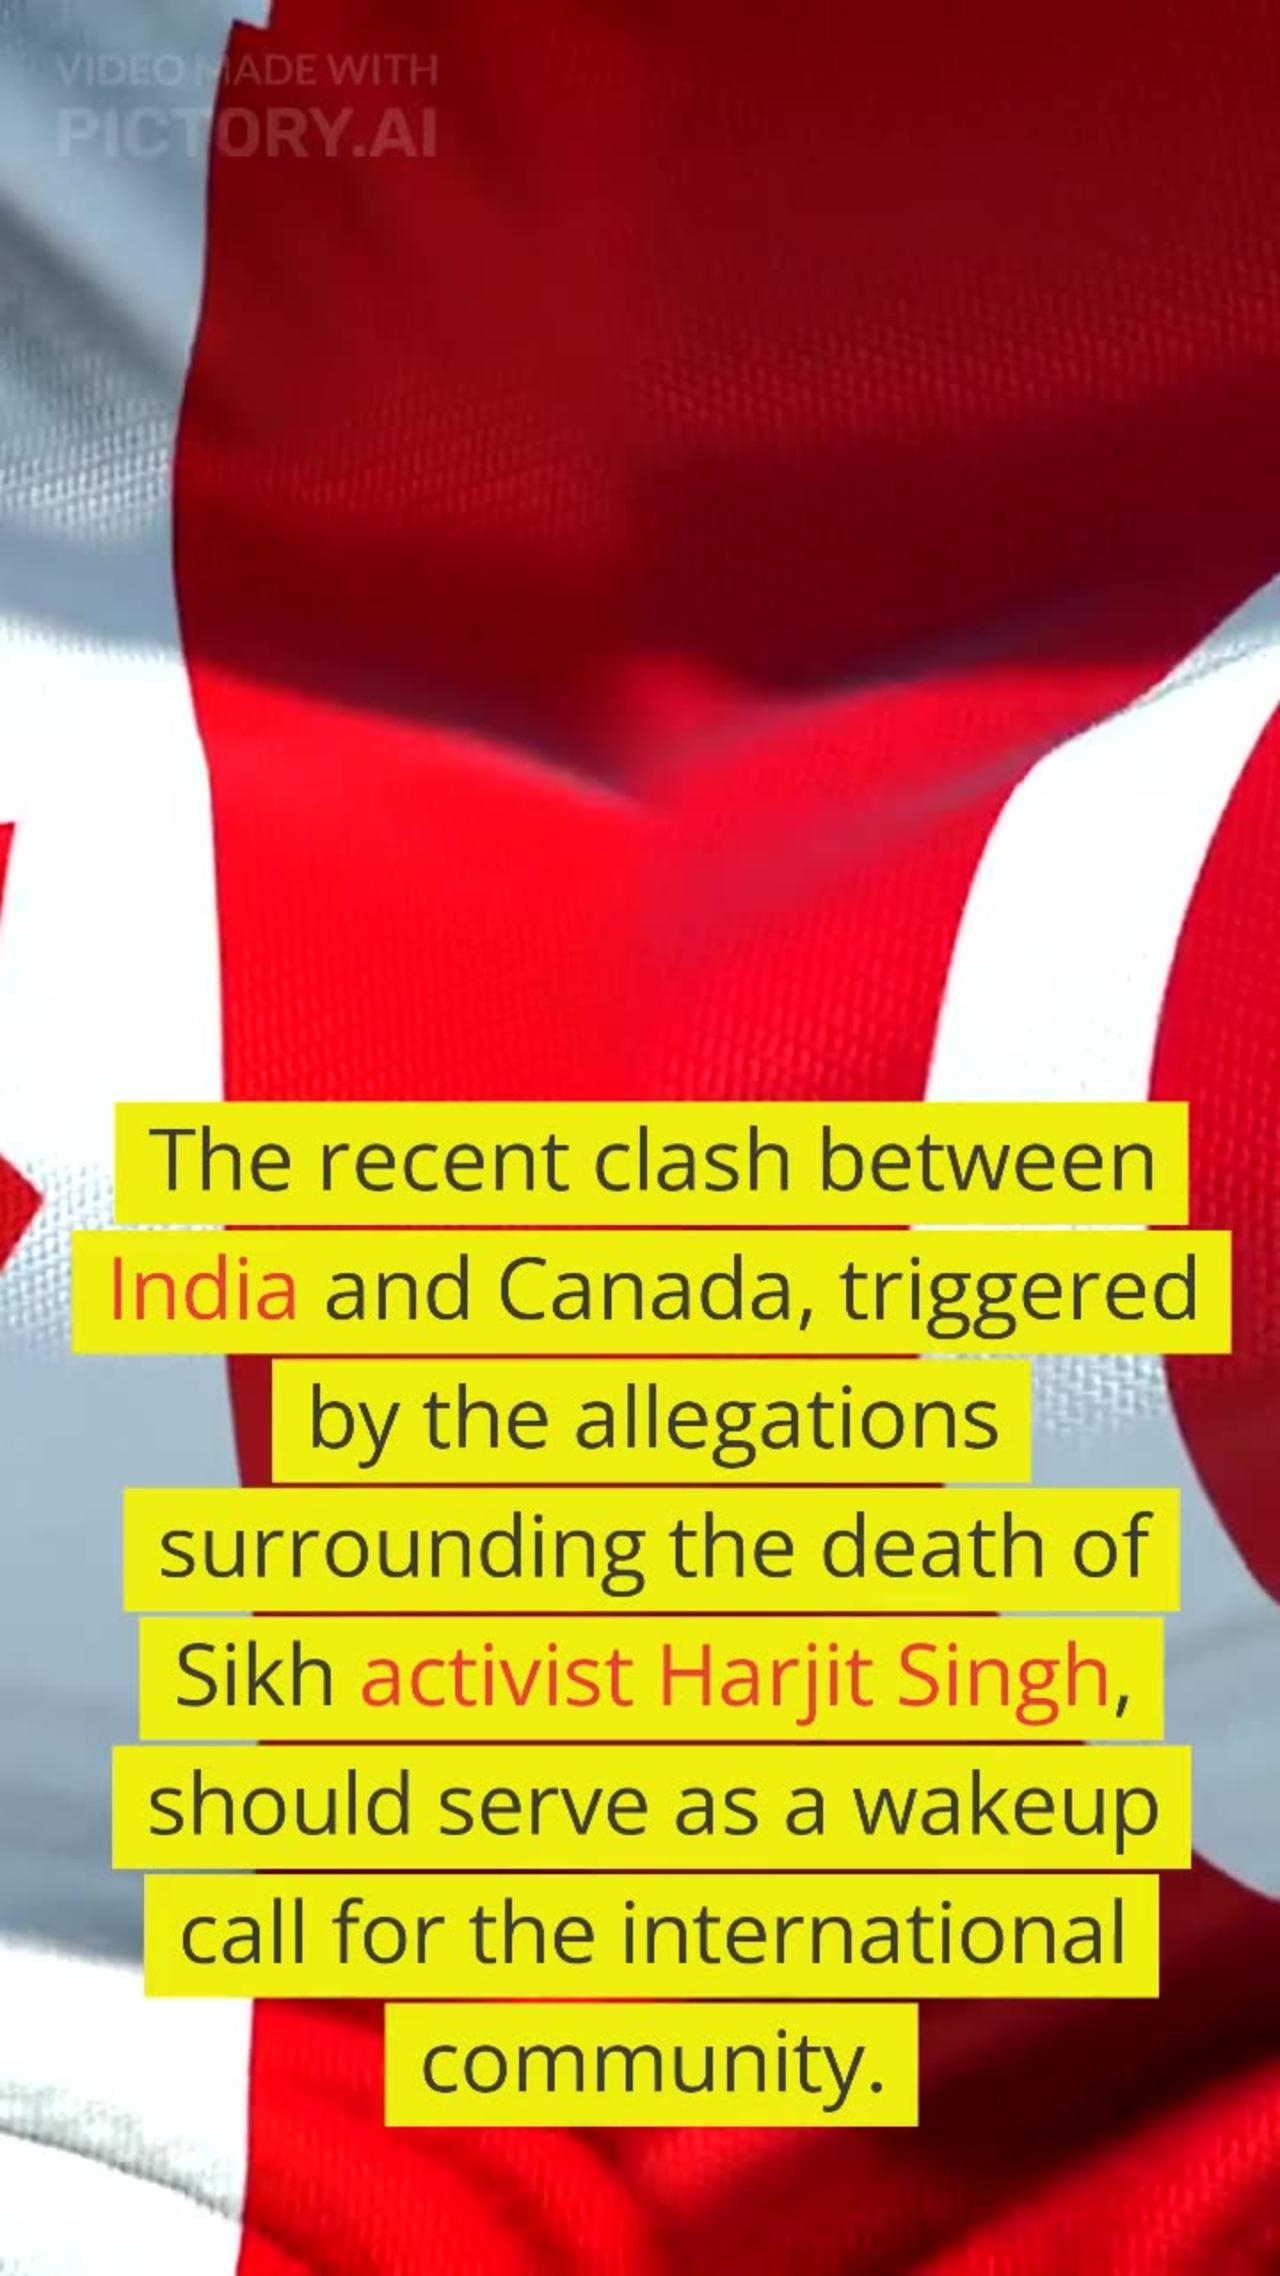 India-Canada Clash Should Be a Wakeup Call